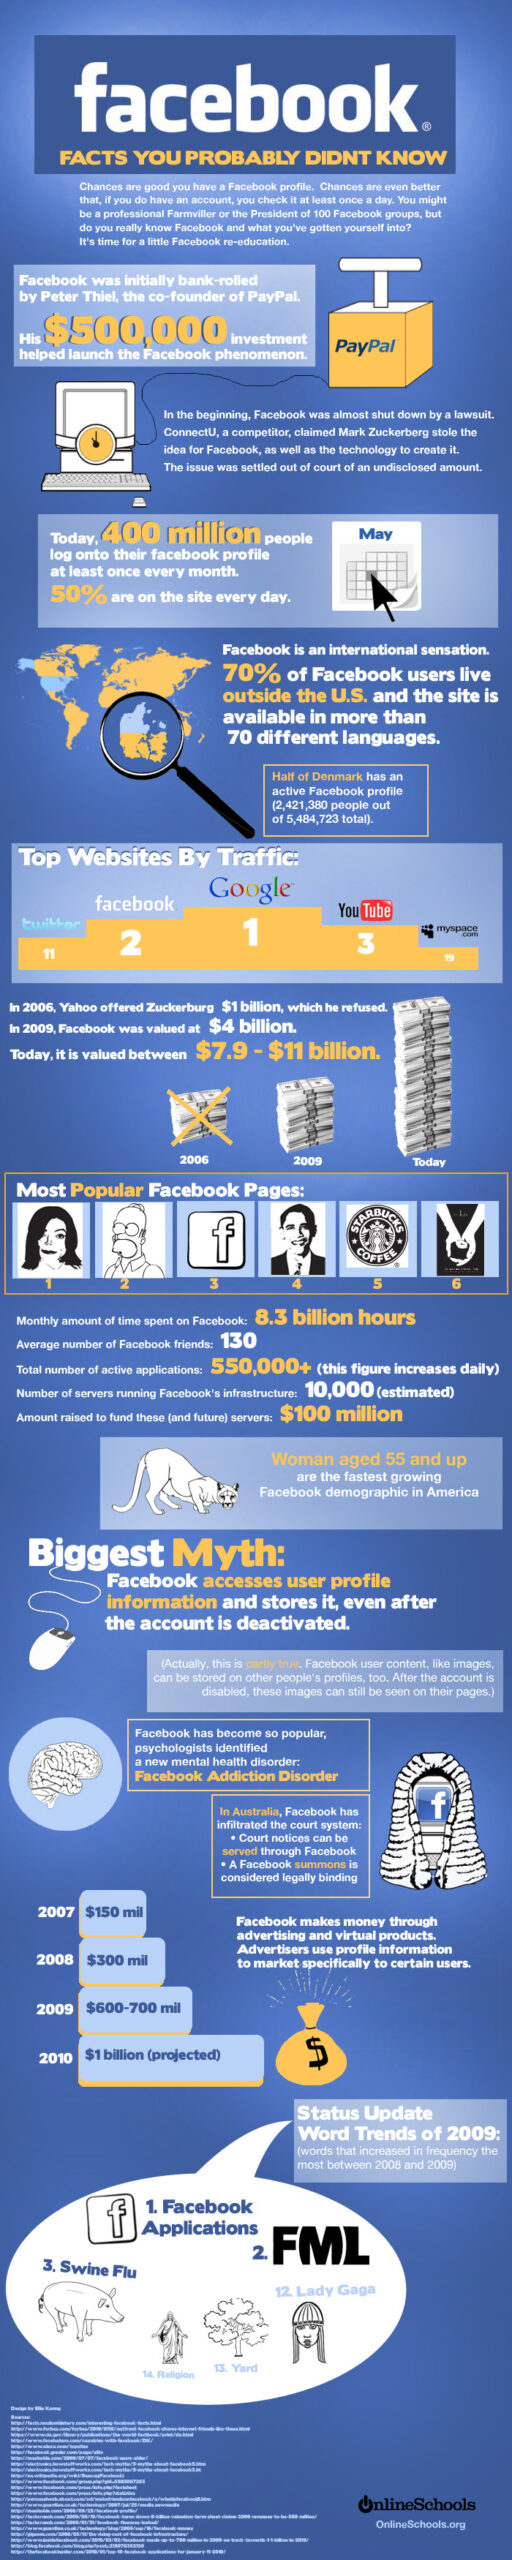 Infographic History of Facebook, Milestones How Mark Zuckerberg Founded